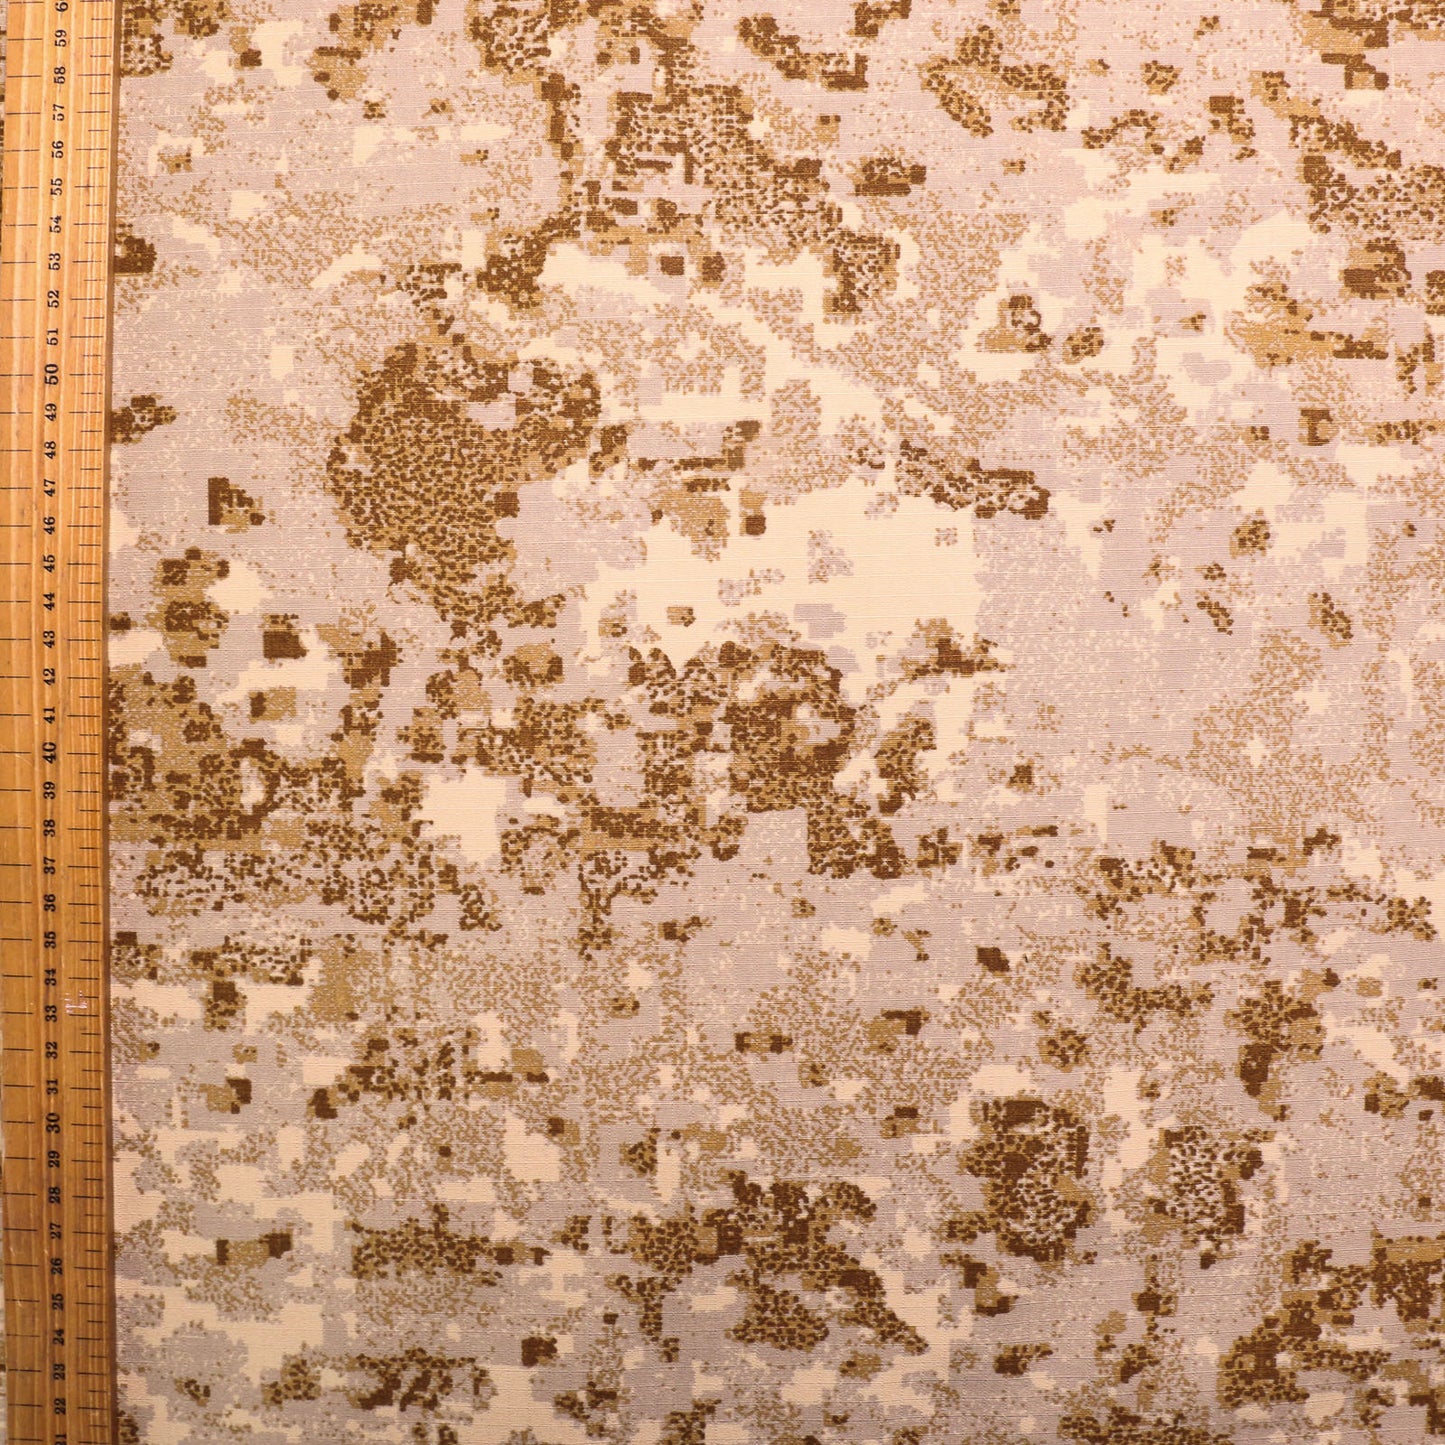 metre pencott desert camouflage dressmaking cotton ripstop fabric in cream grey and beige